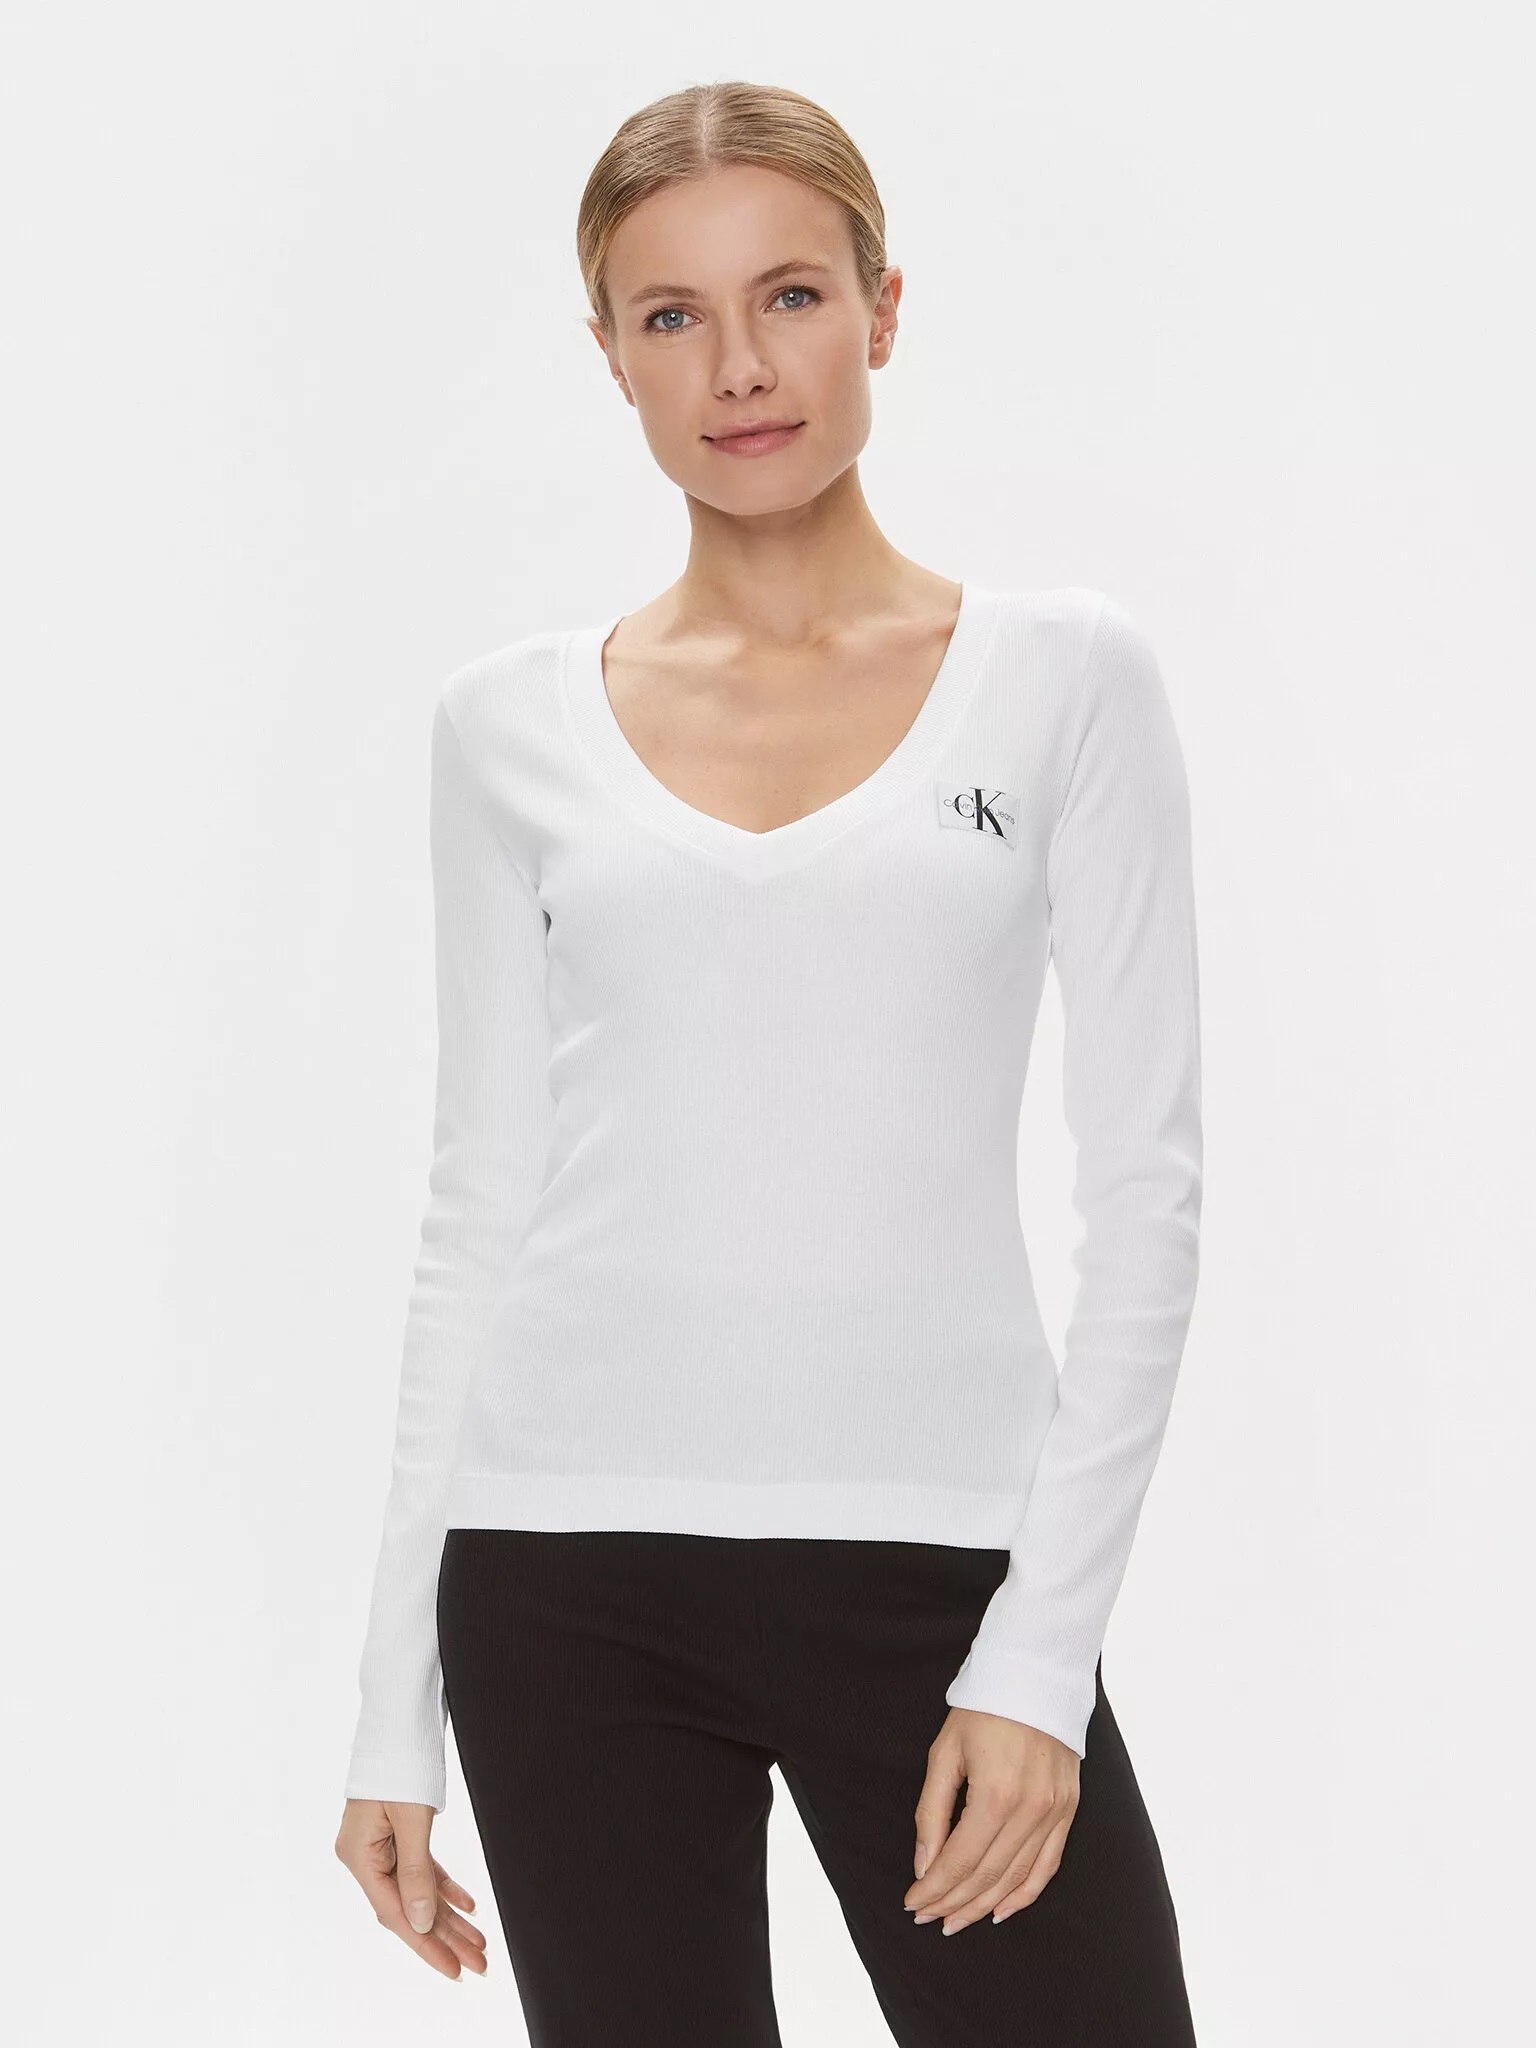 Calvin Klein dámské tričko s logem bílé Velikost: S